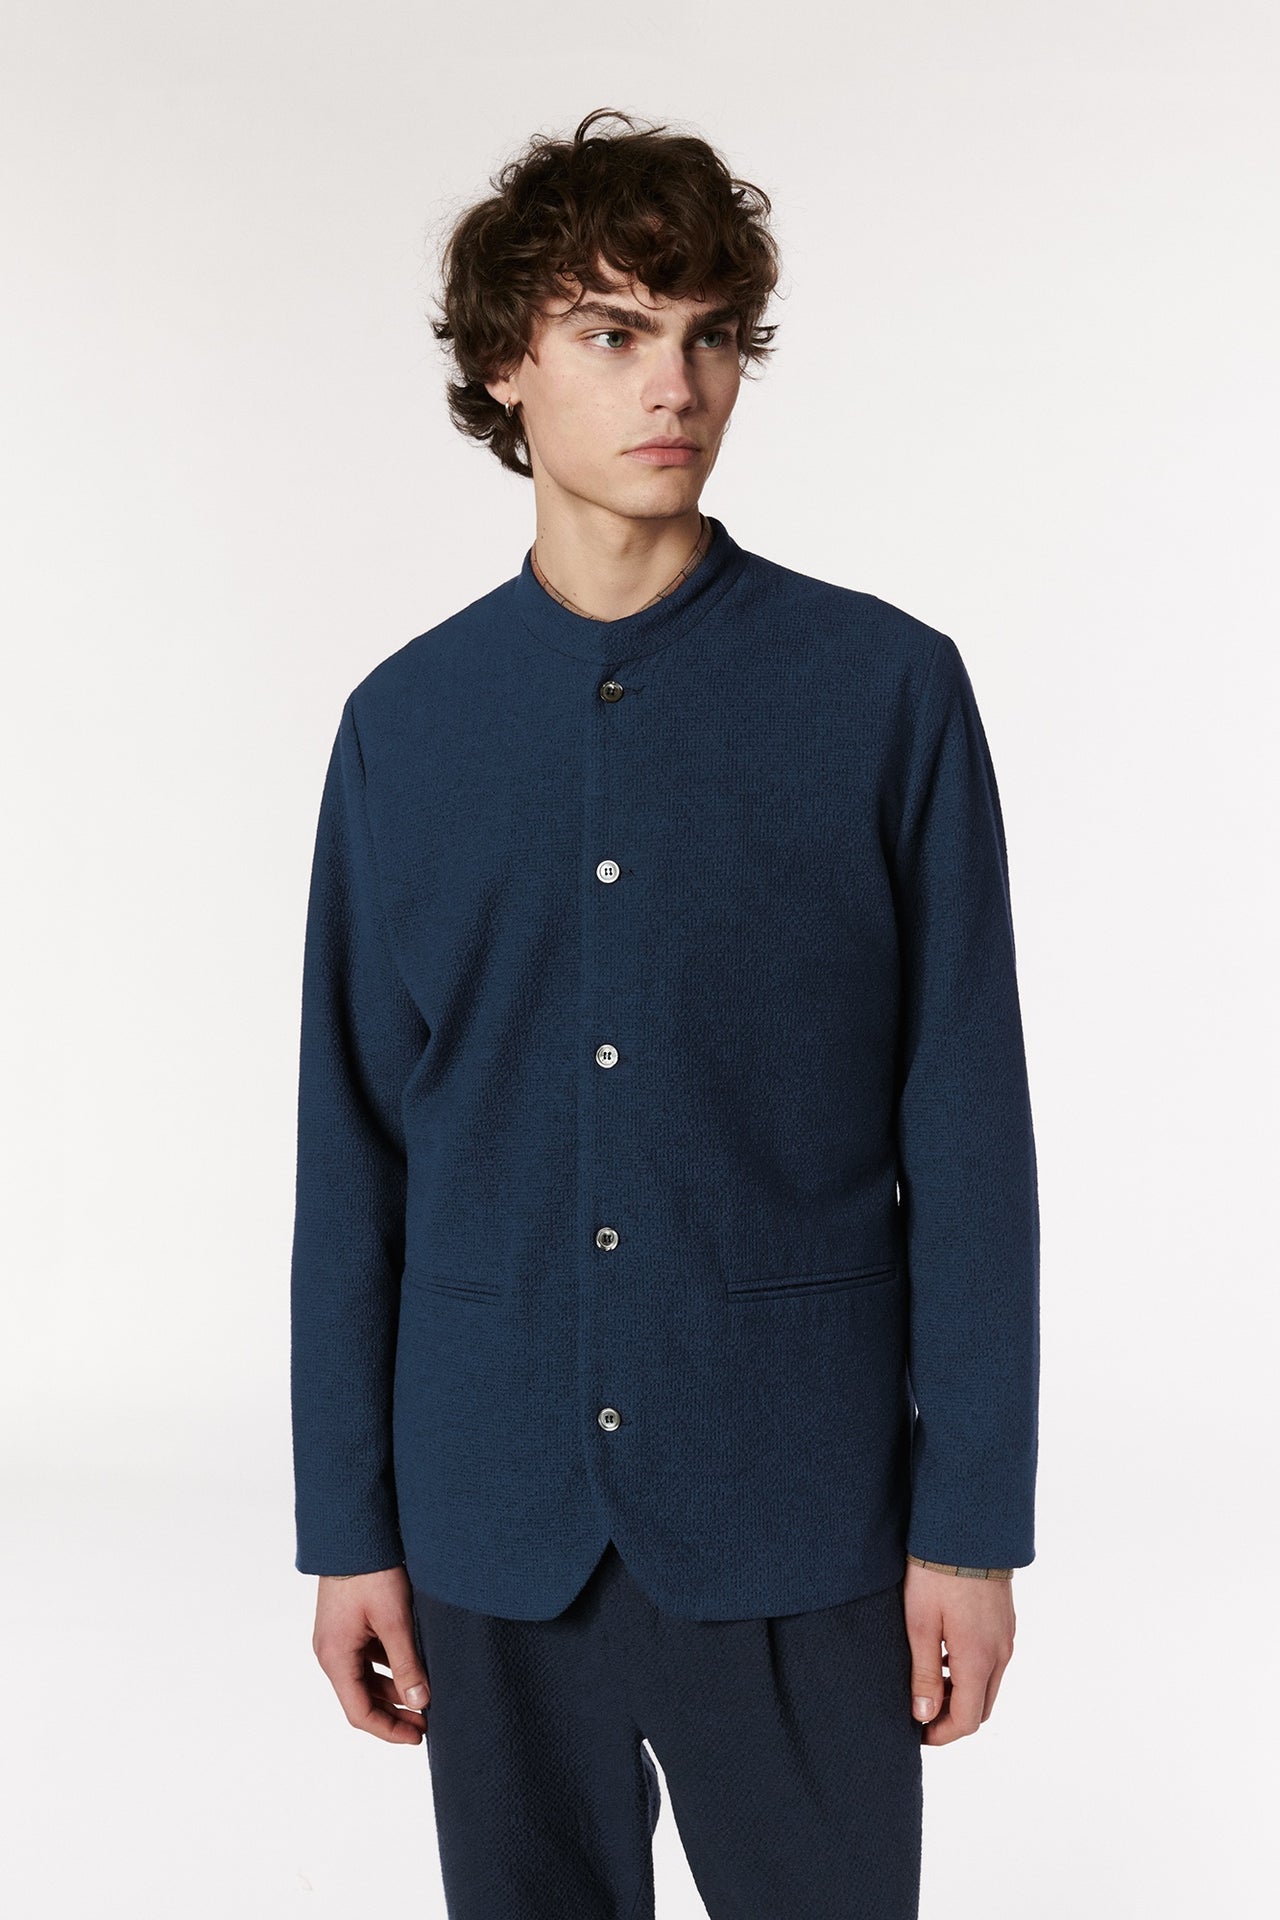 Jacket in a Navy  Blue Italian Virgin Wool and Cotton Seersucker